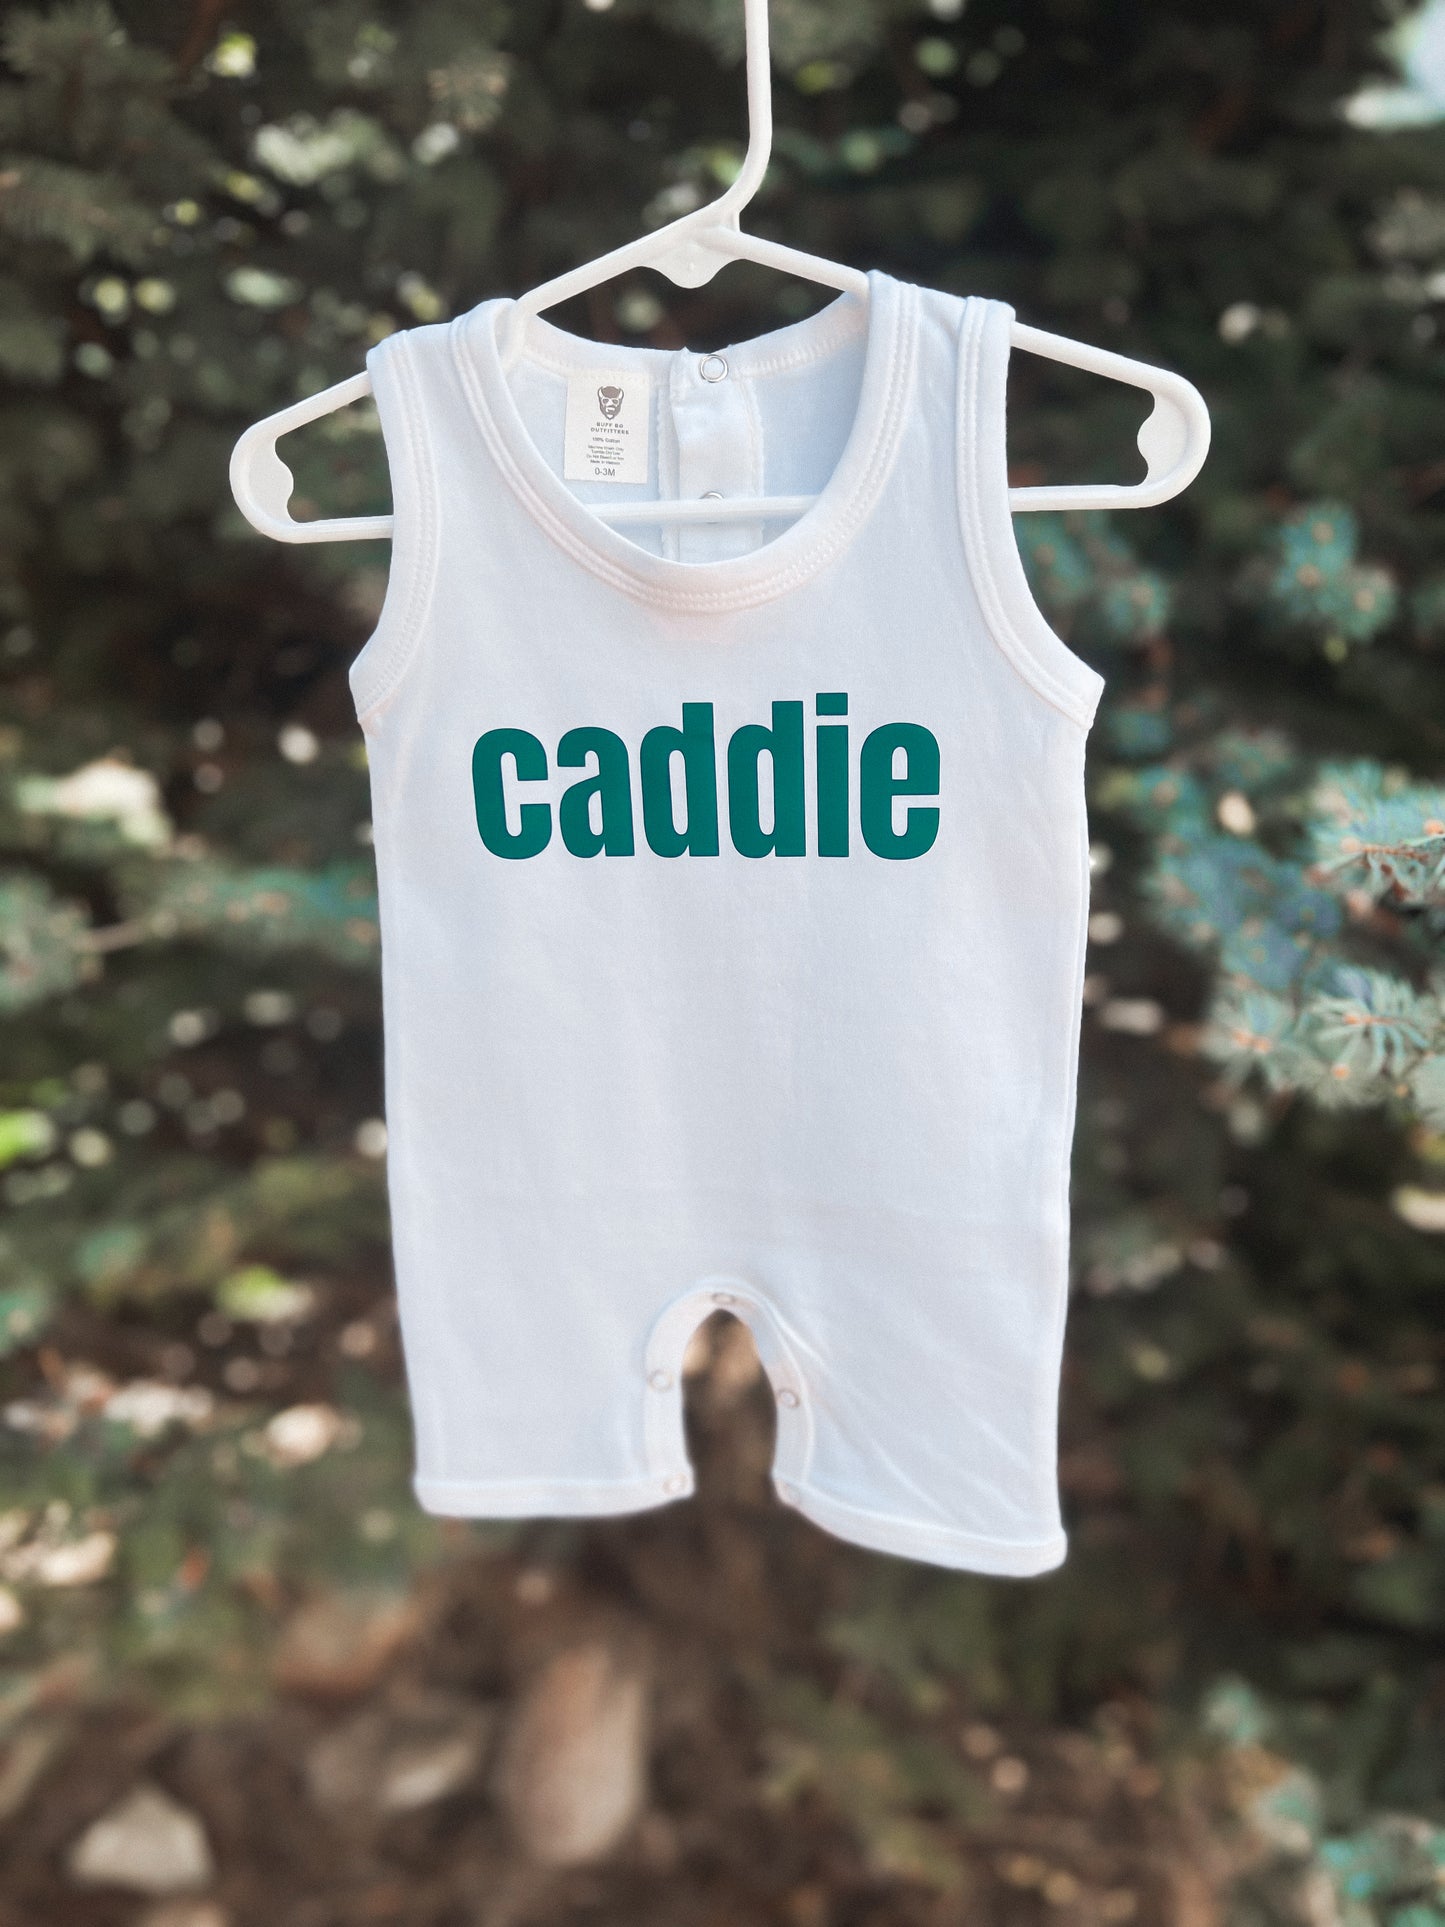 Caddie Golf Shirt Kids Toddler Youth T-Shirt or Baby Bodysuit